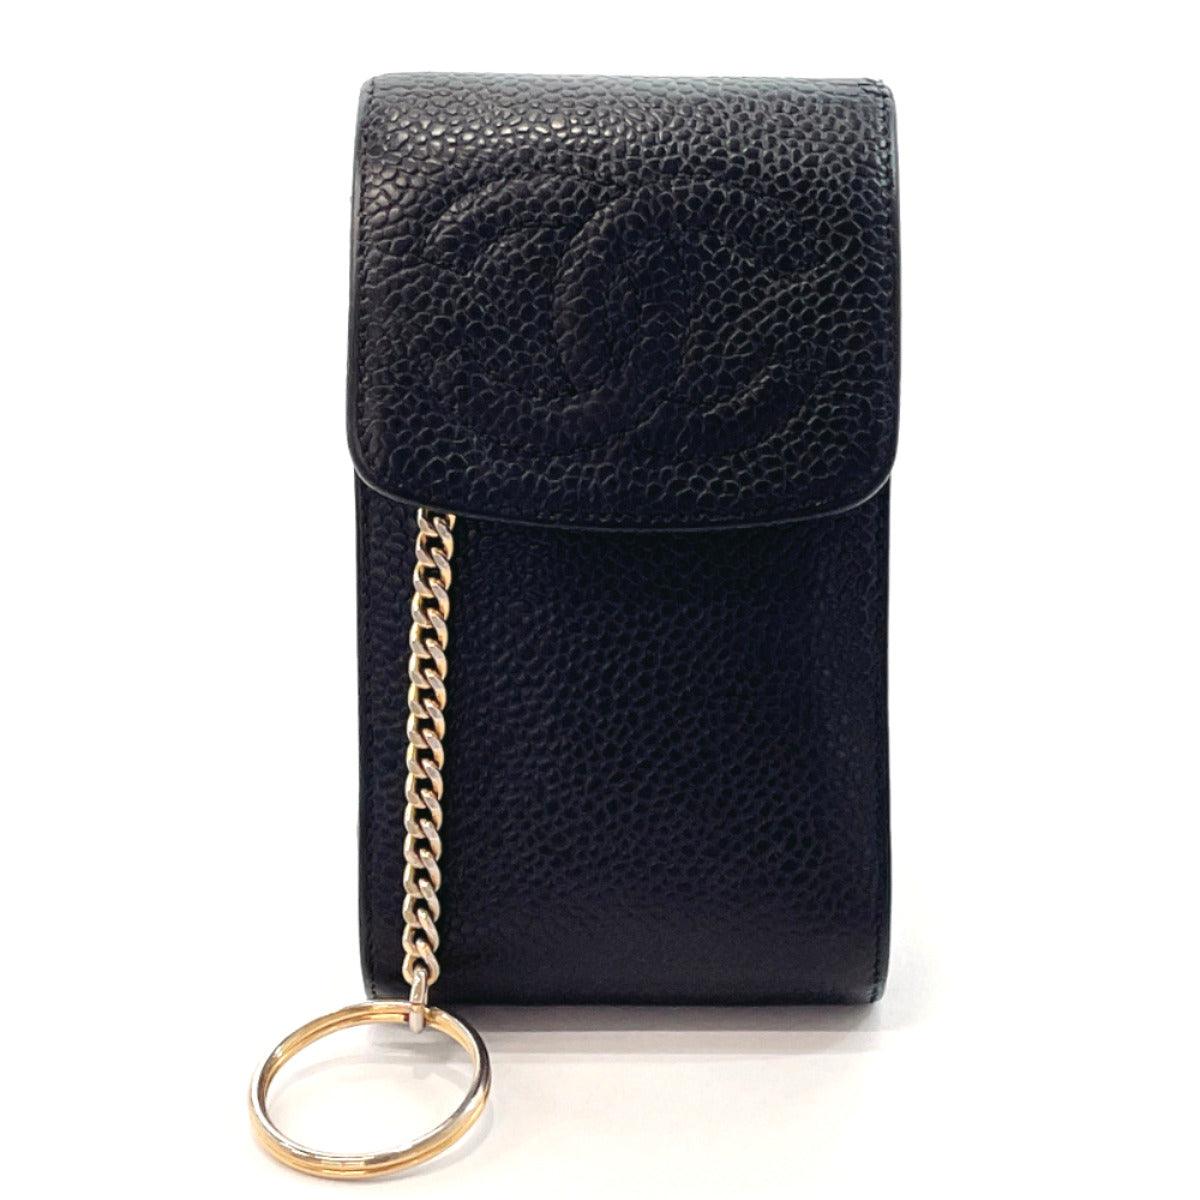 Chanel Vintage Chanel Black Caviar Leather IPhone Cigarette Case